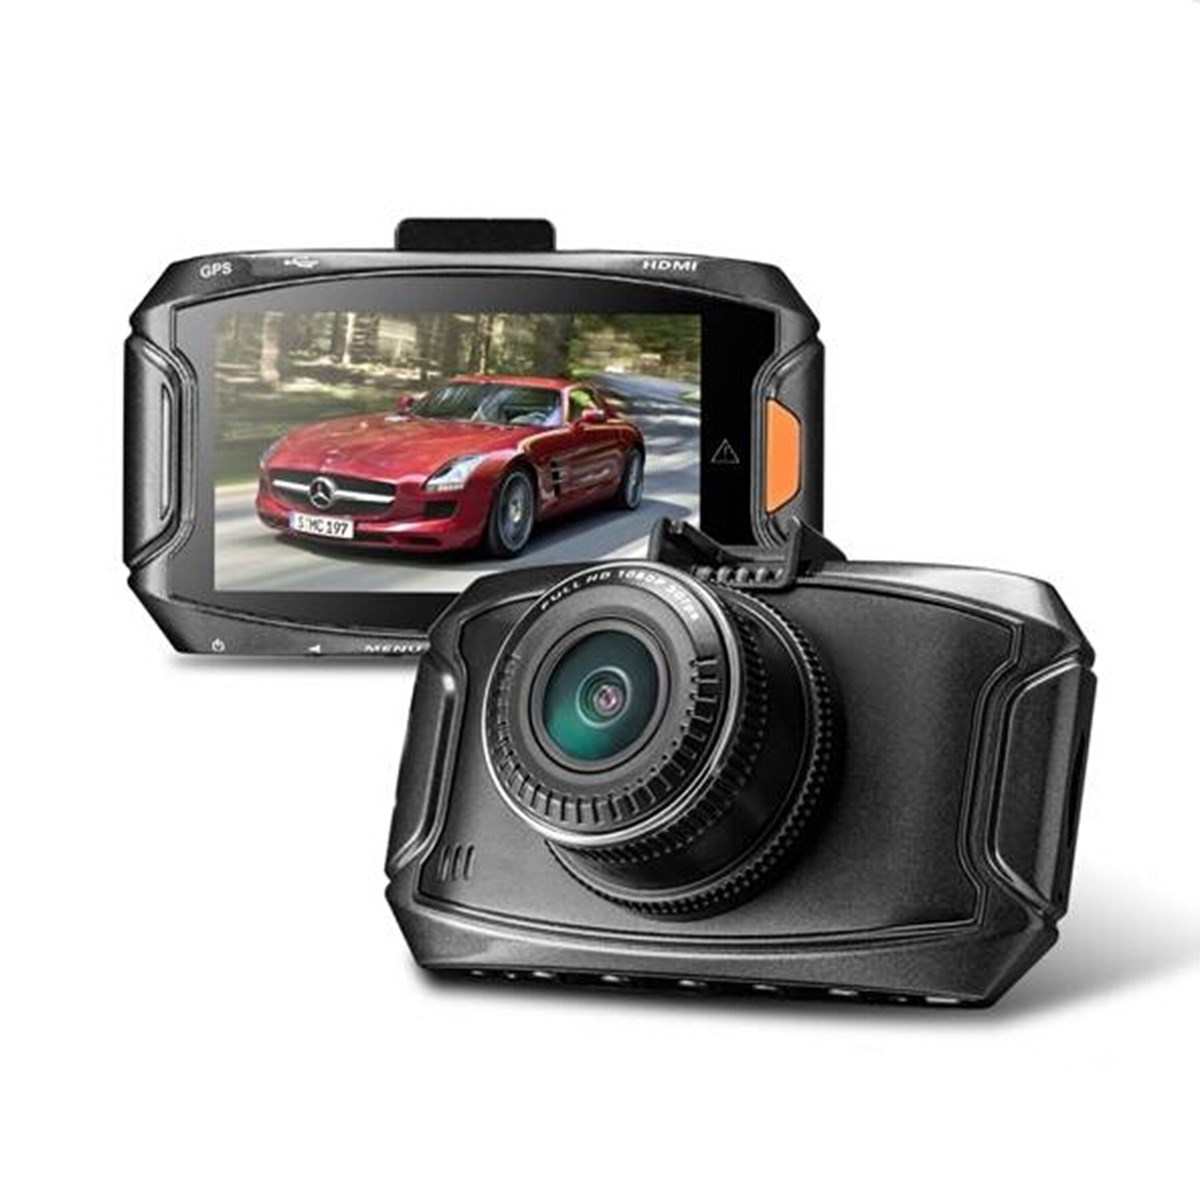 GS90C A7LA70 Car DVR Full HD Camera Video Recorder 2.7inch LCD G-Sensor with GPS DashCam 170 degree angle lens